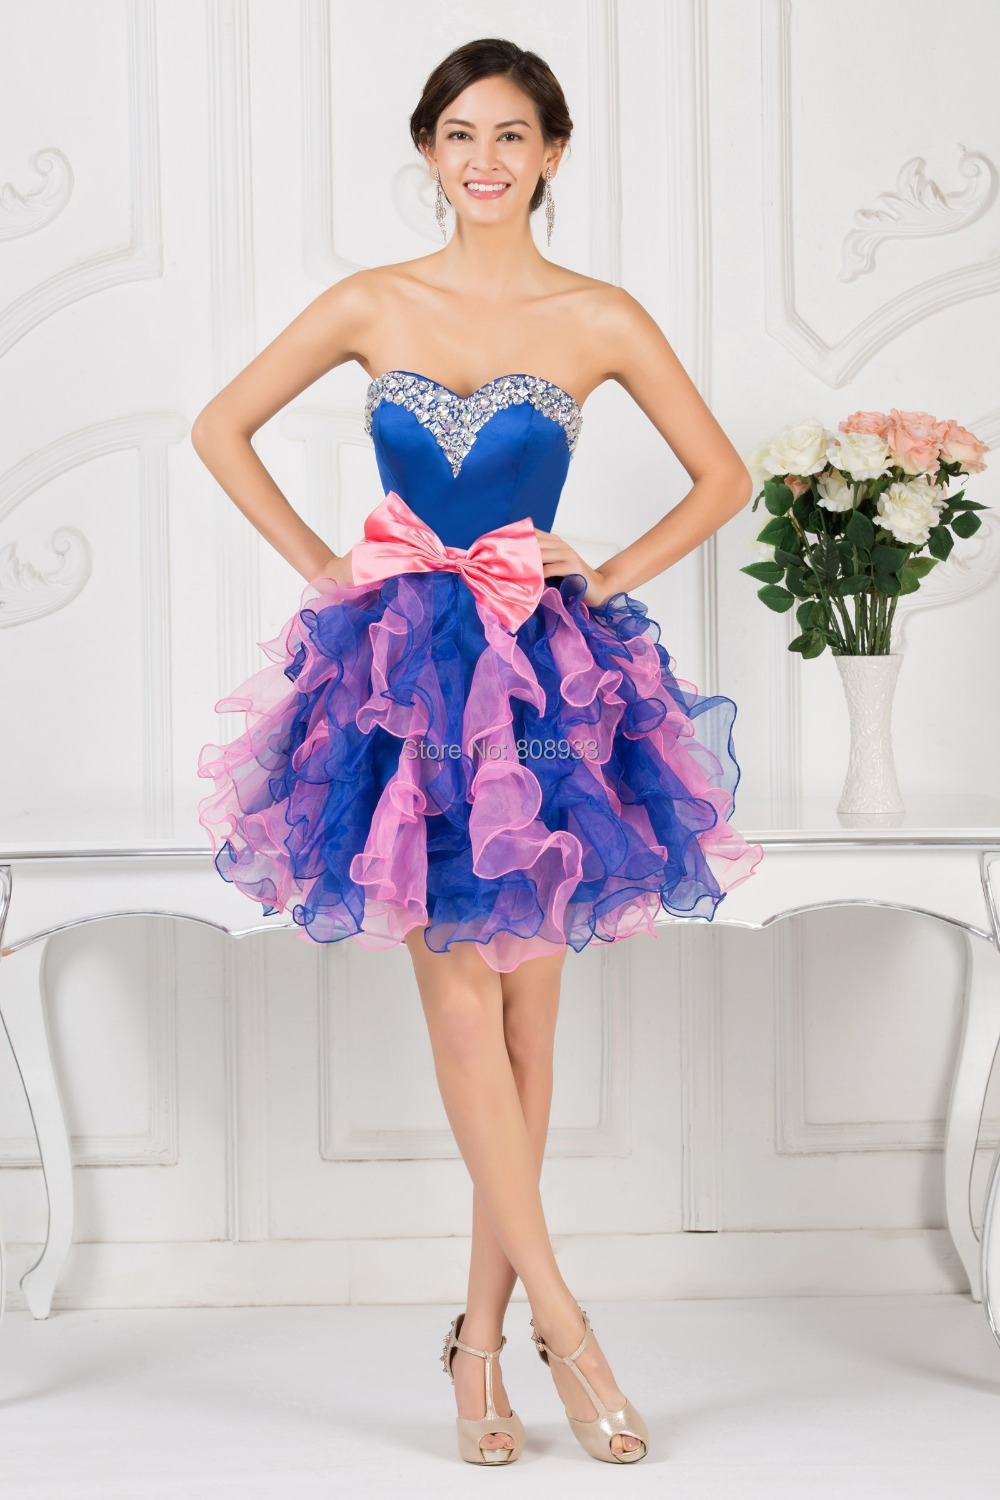 Sweetheart Cute Princess Short Prom Dresses 2015 Cheap Evening Dress ...